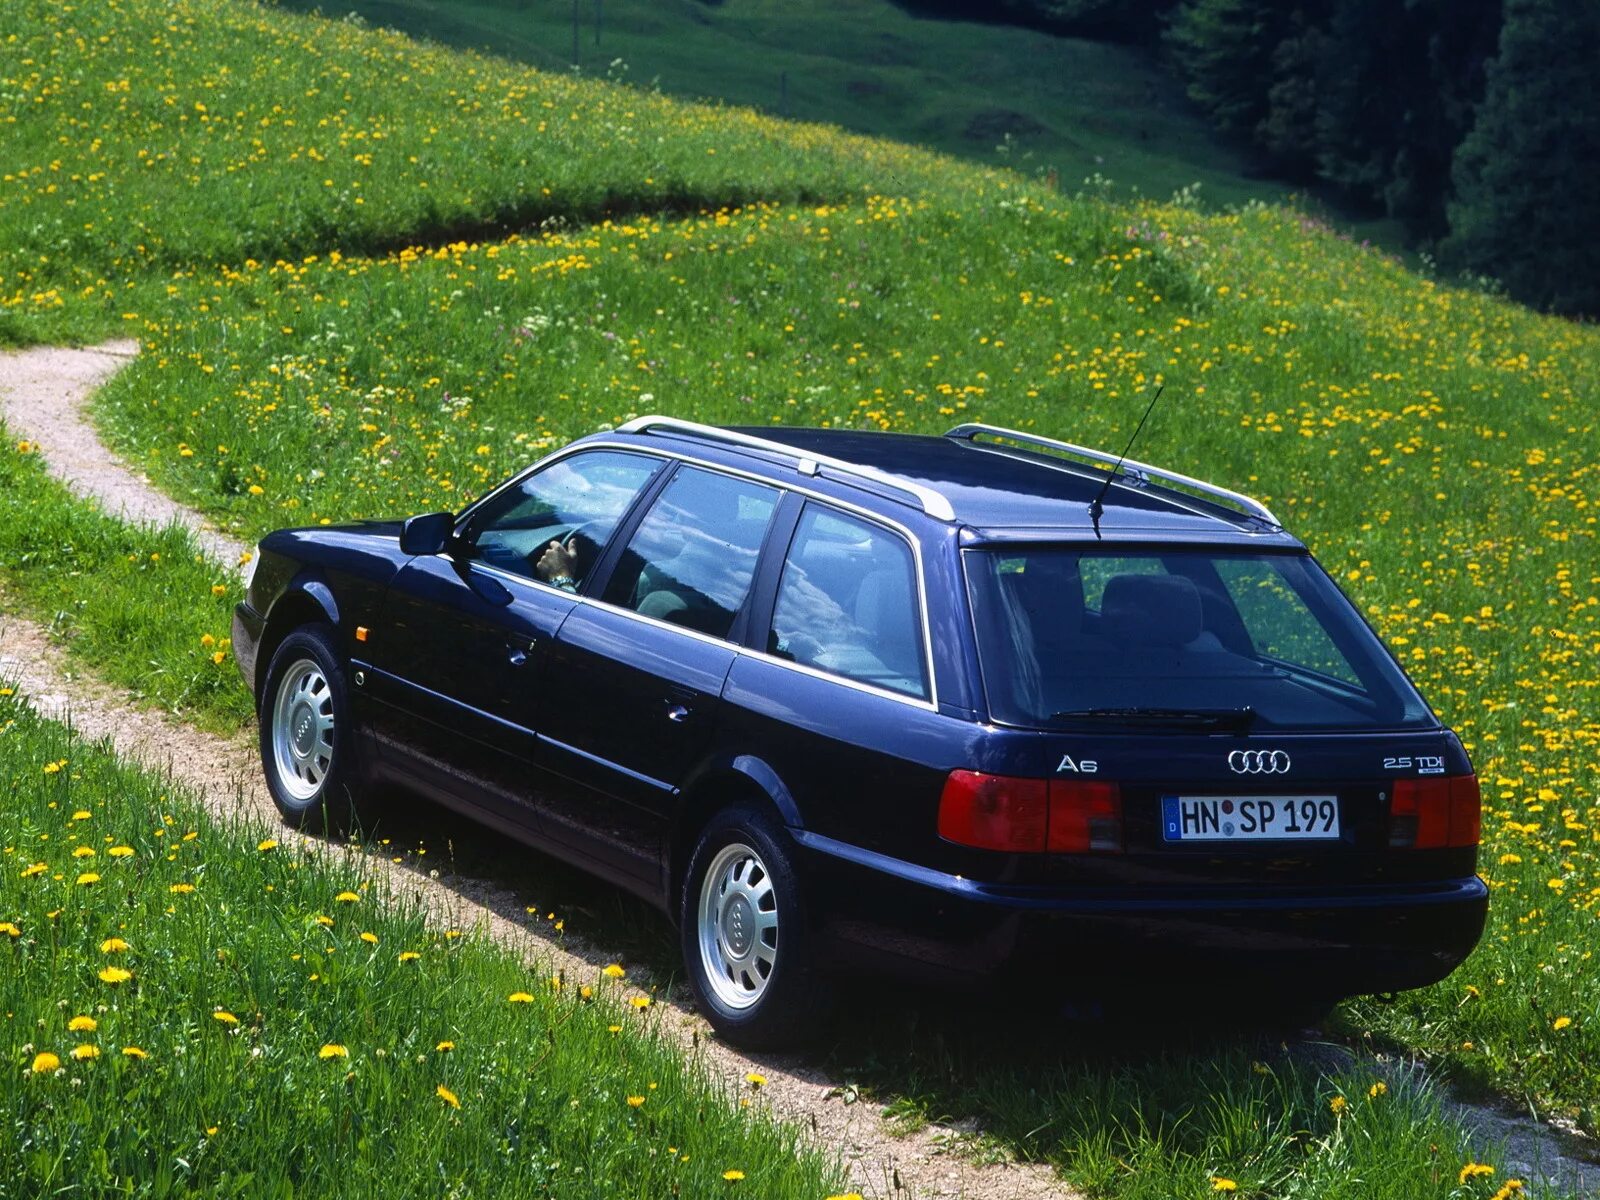 Ауди универсал 1.9 тди. Audi a6 универсал 1995. Audi a6 c4 Авант. Audi a6 1996 универсал. Audi a6 c4 1996 универсал.